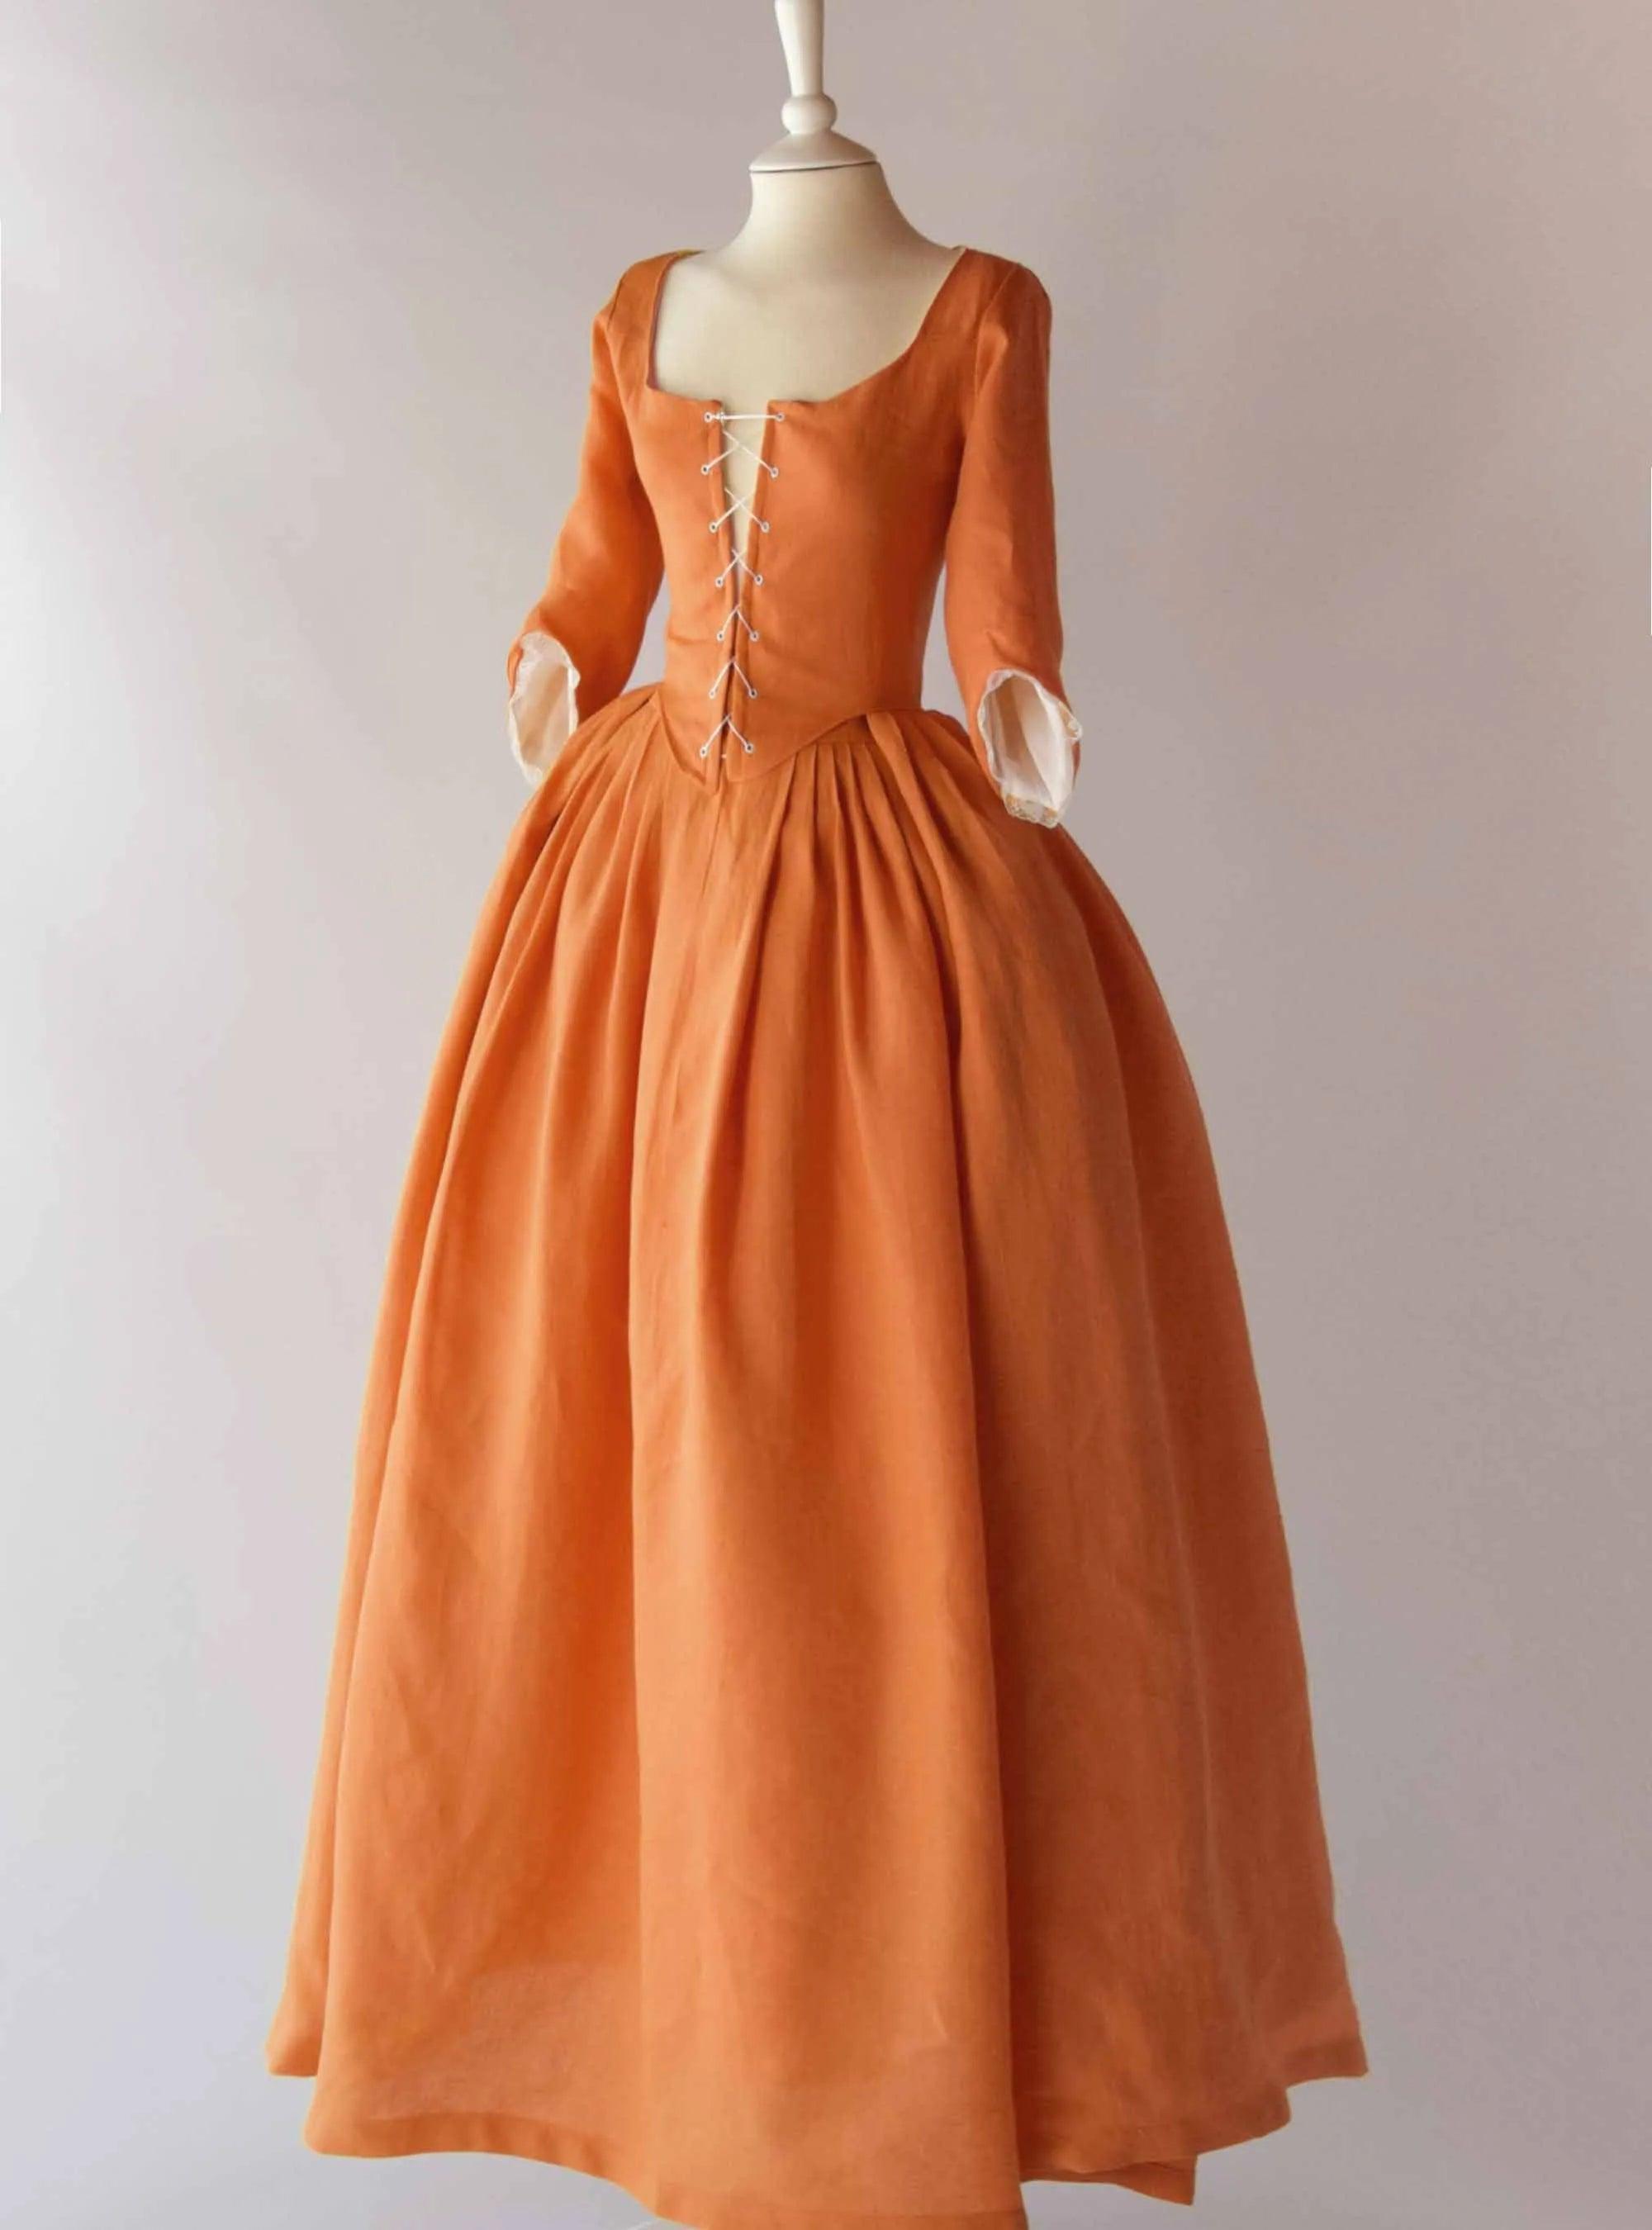 LOUISE, 18th-Century Dress in Apricot Linen - Atelier Serraspina